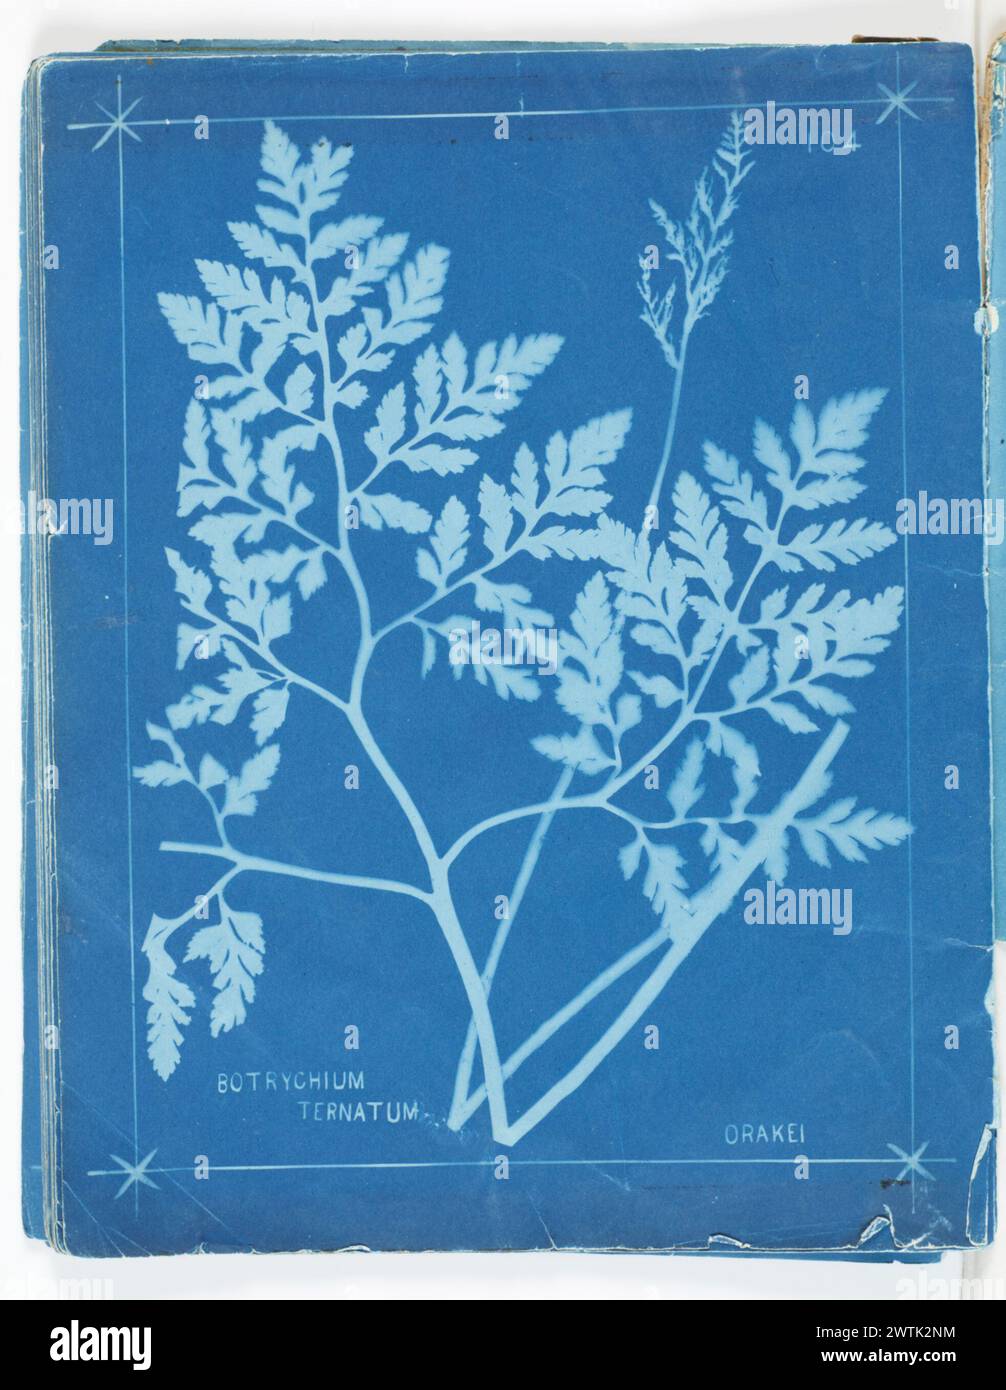 Botrychium ternatum, Orakei. From the album: New Zealand ferns. 148 varieties cyanotypes, photographic prints Stock Photo